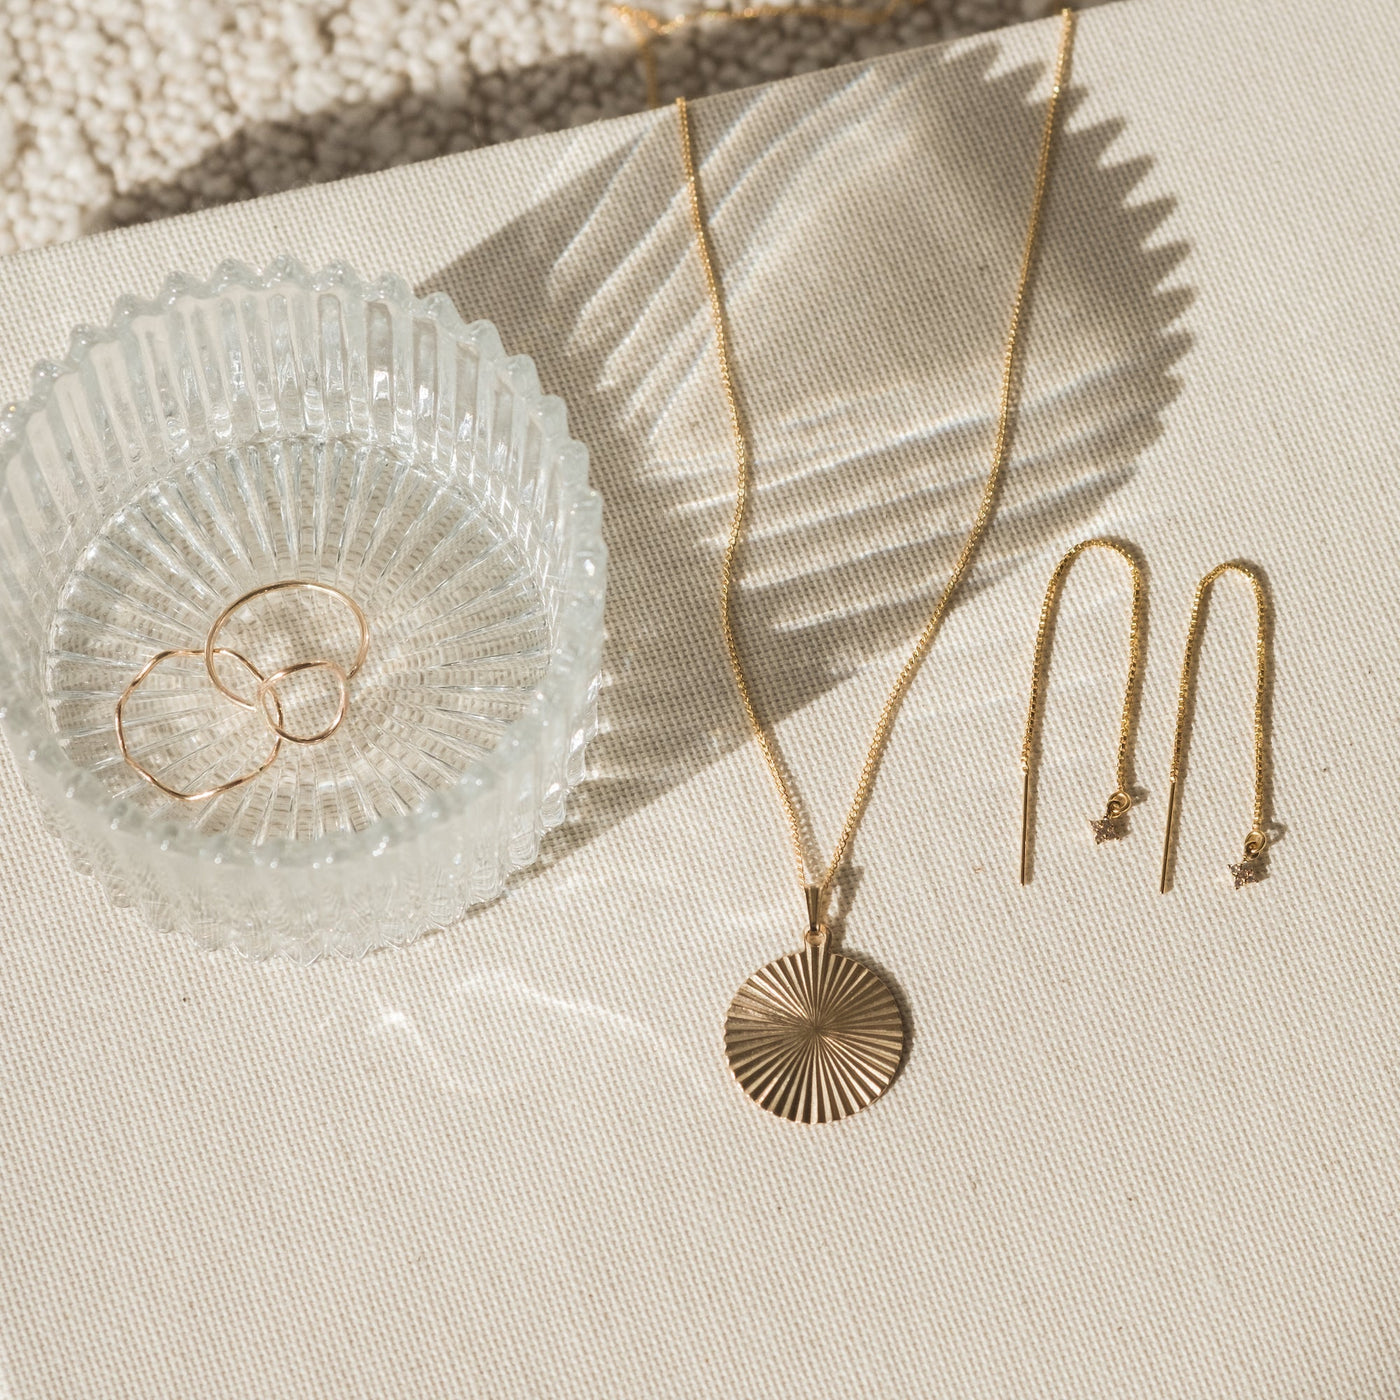 Sunburst Pendant Necklace | Simple & Dainty Jewelry